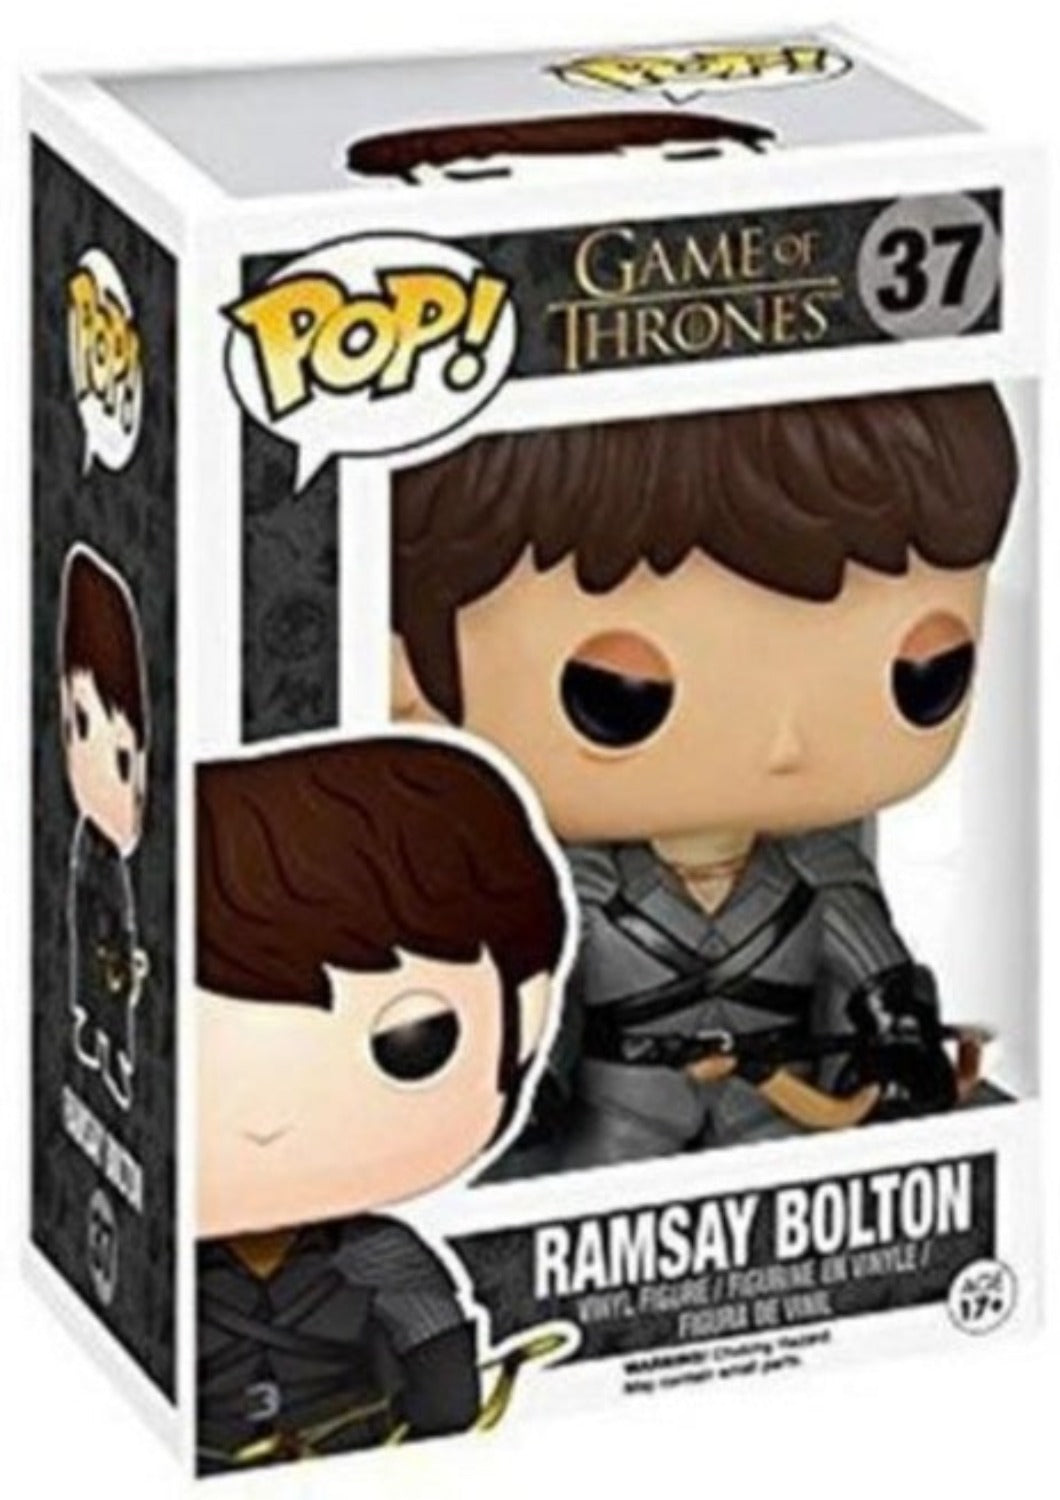  Funko Pop! Game of Thrones - Jon Snow & Ramsay Bolton